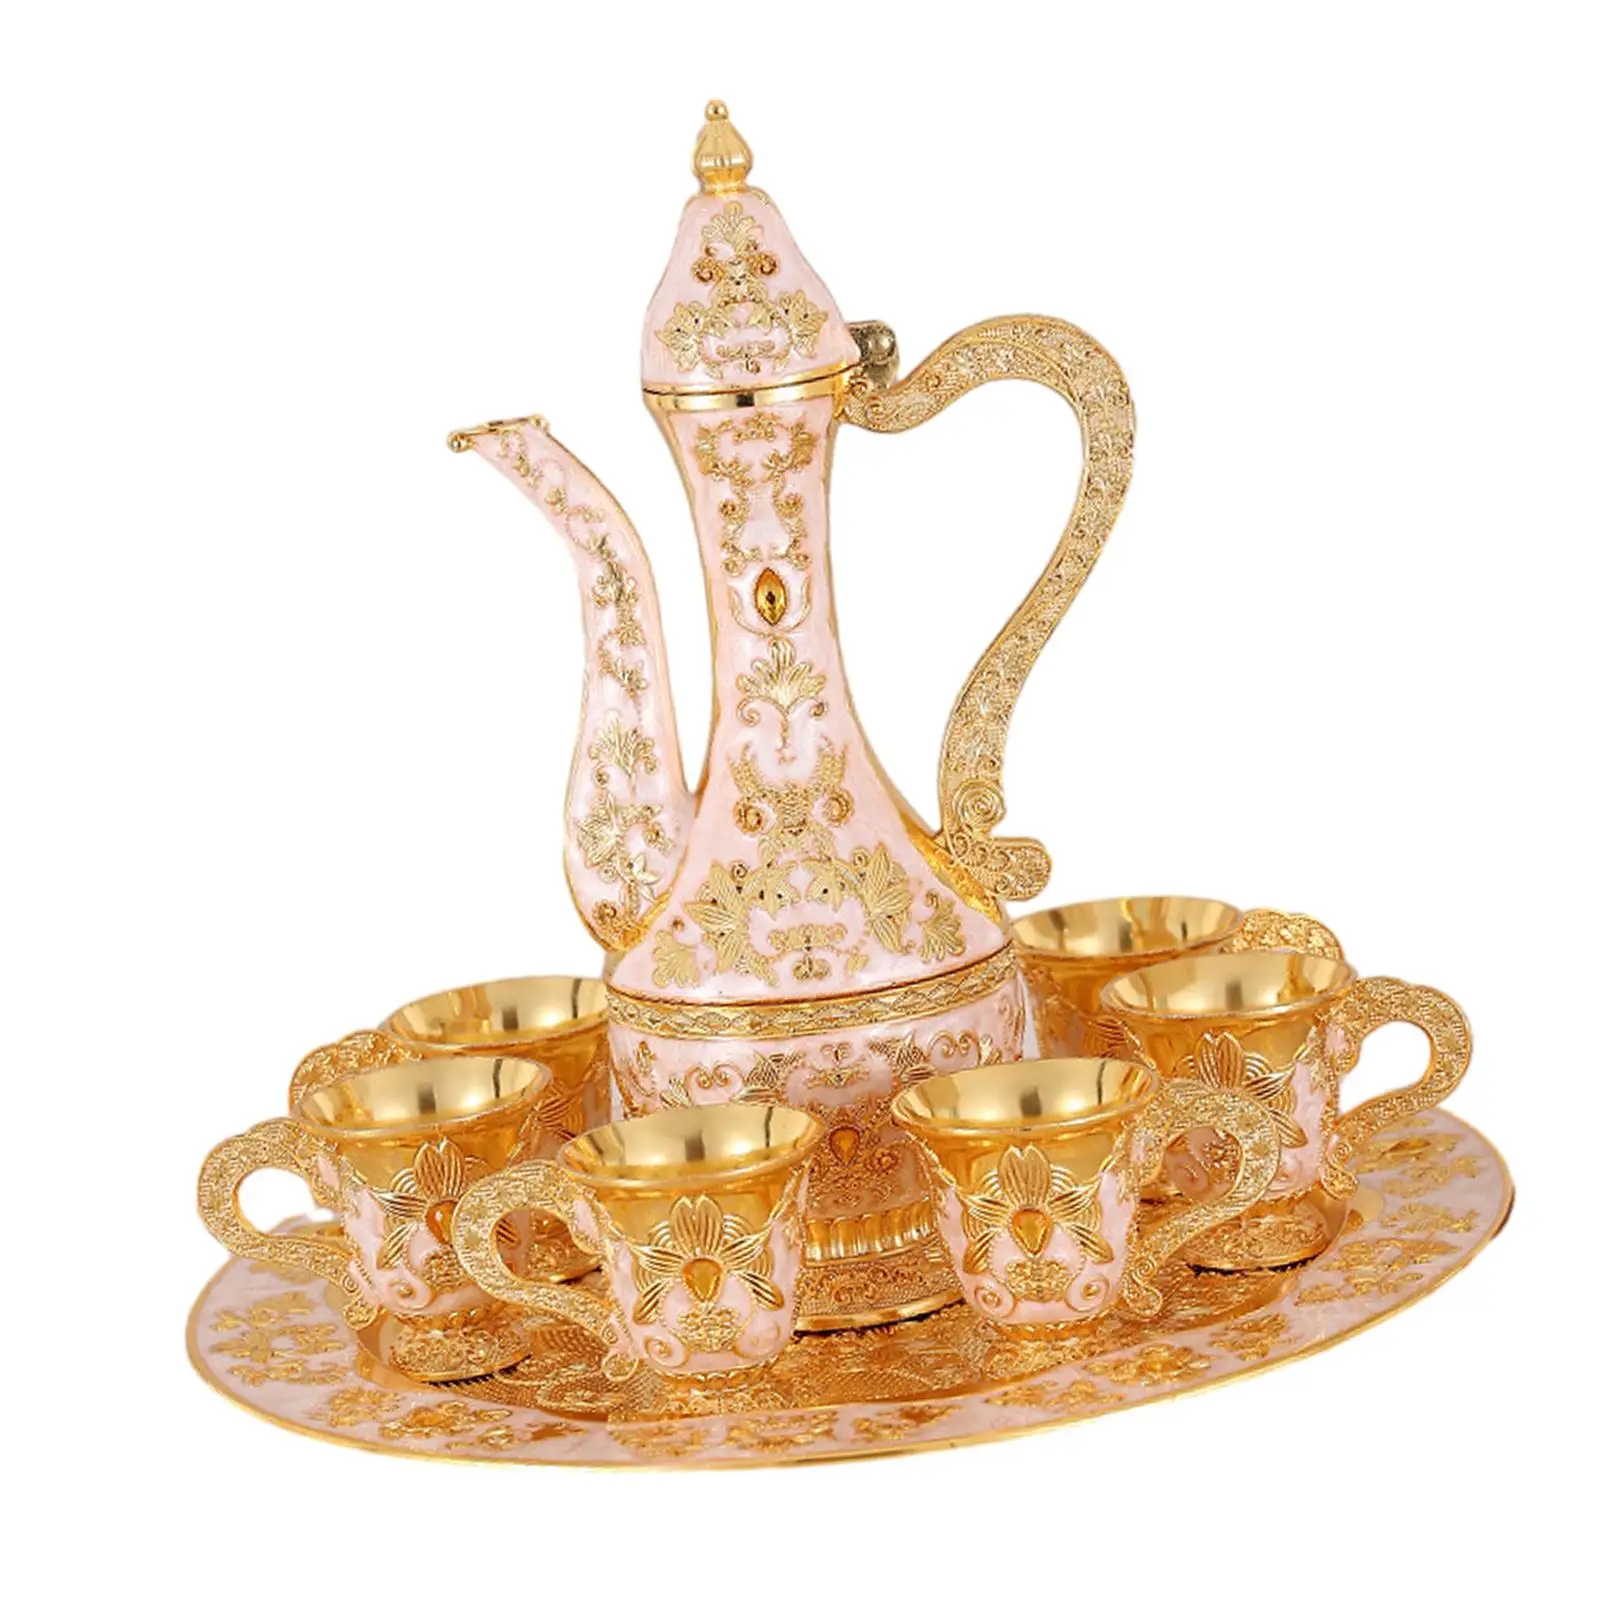 Vintage Turkish Coffee Pot Set Home Decor Tea Kettle Set for Wedding Gift Dining Table Tea Party Kitchen Ornaments